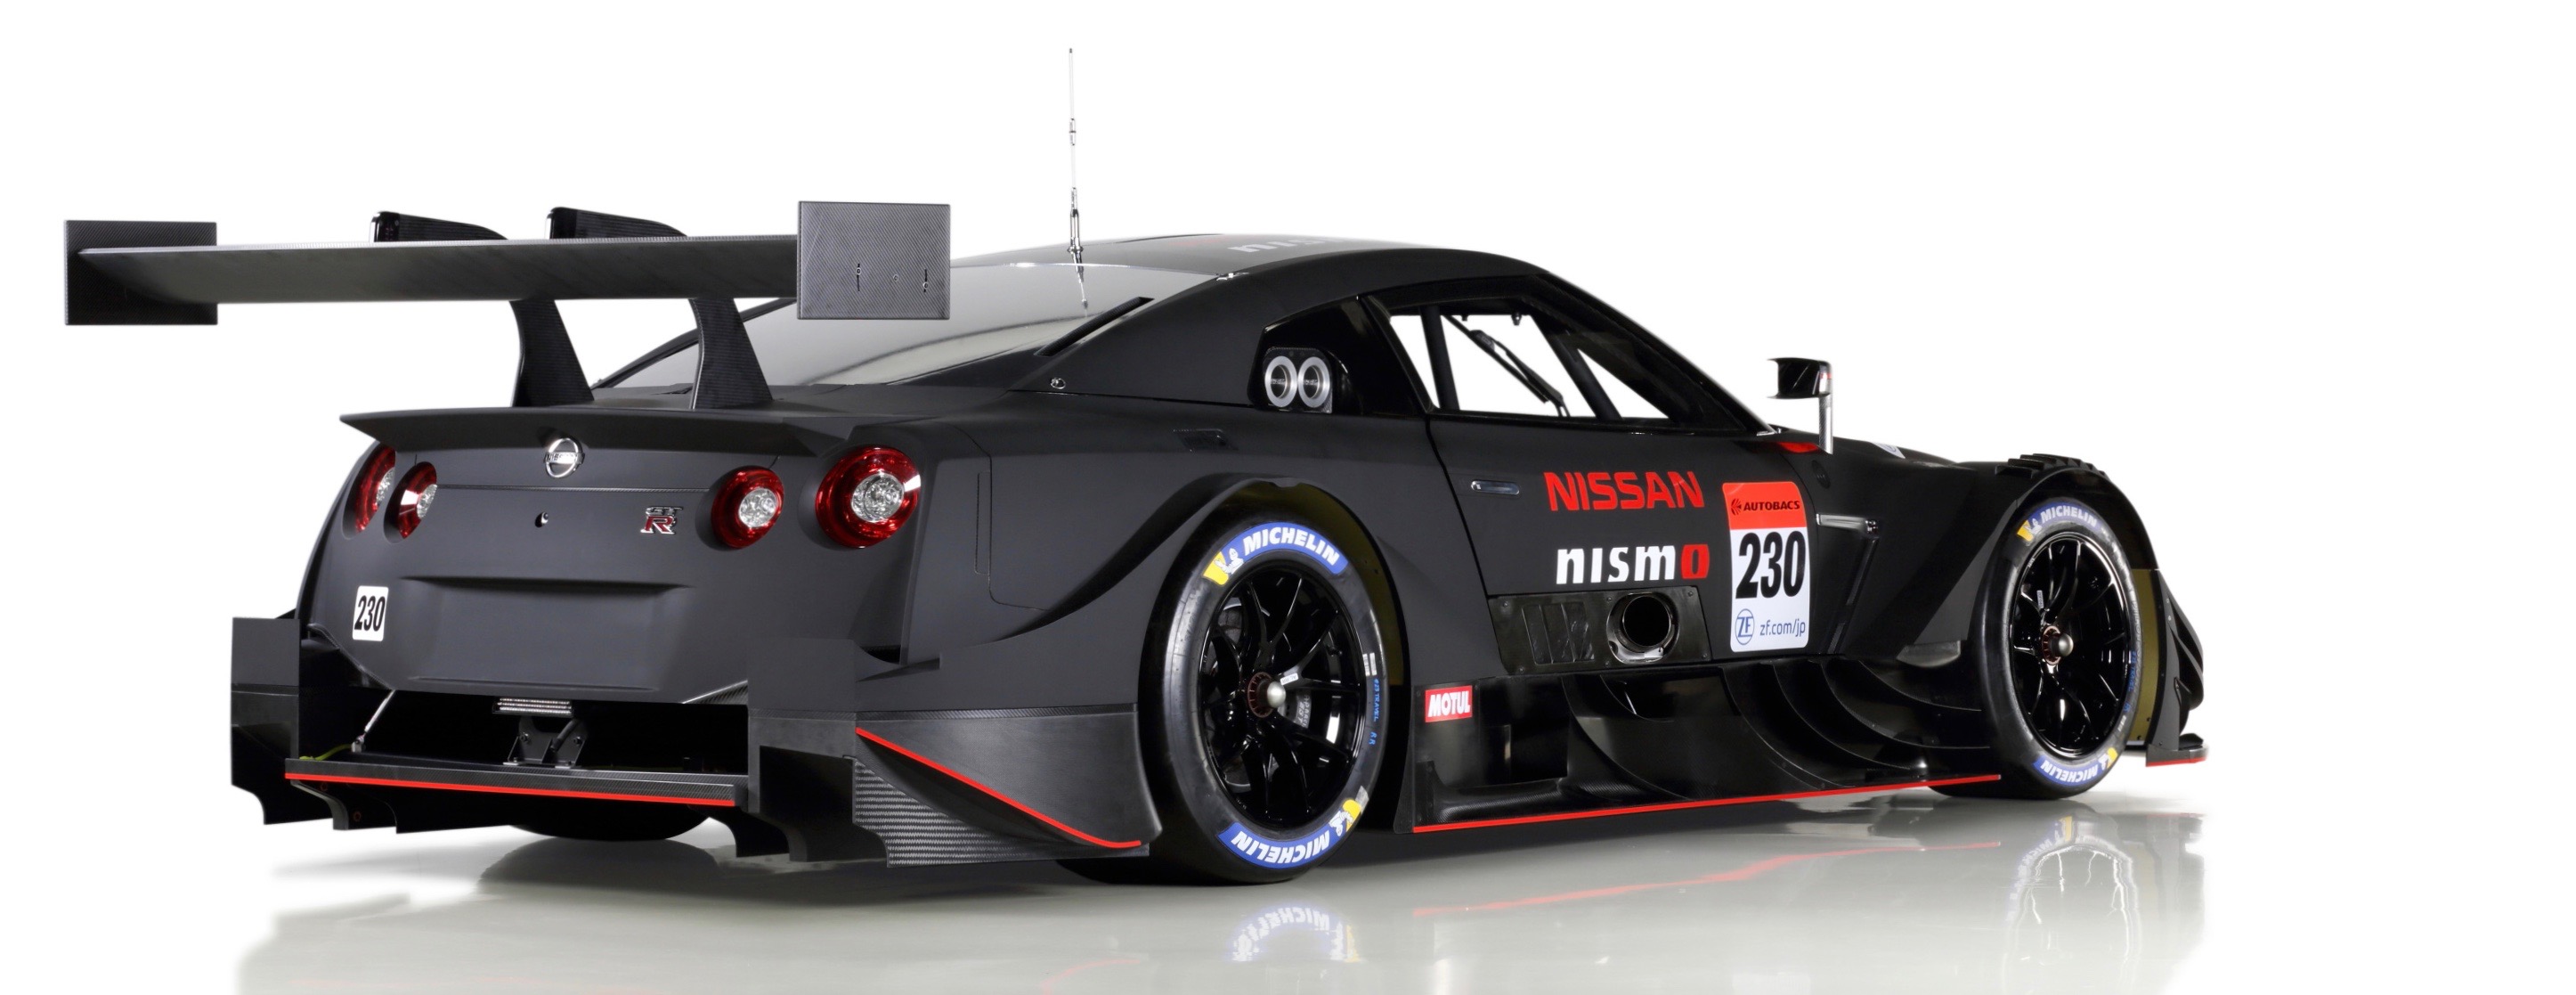 Nissan, Nissan unveils Nismo GT-R racer for 2020, ClassicCars.com Journal